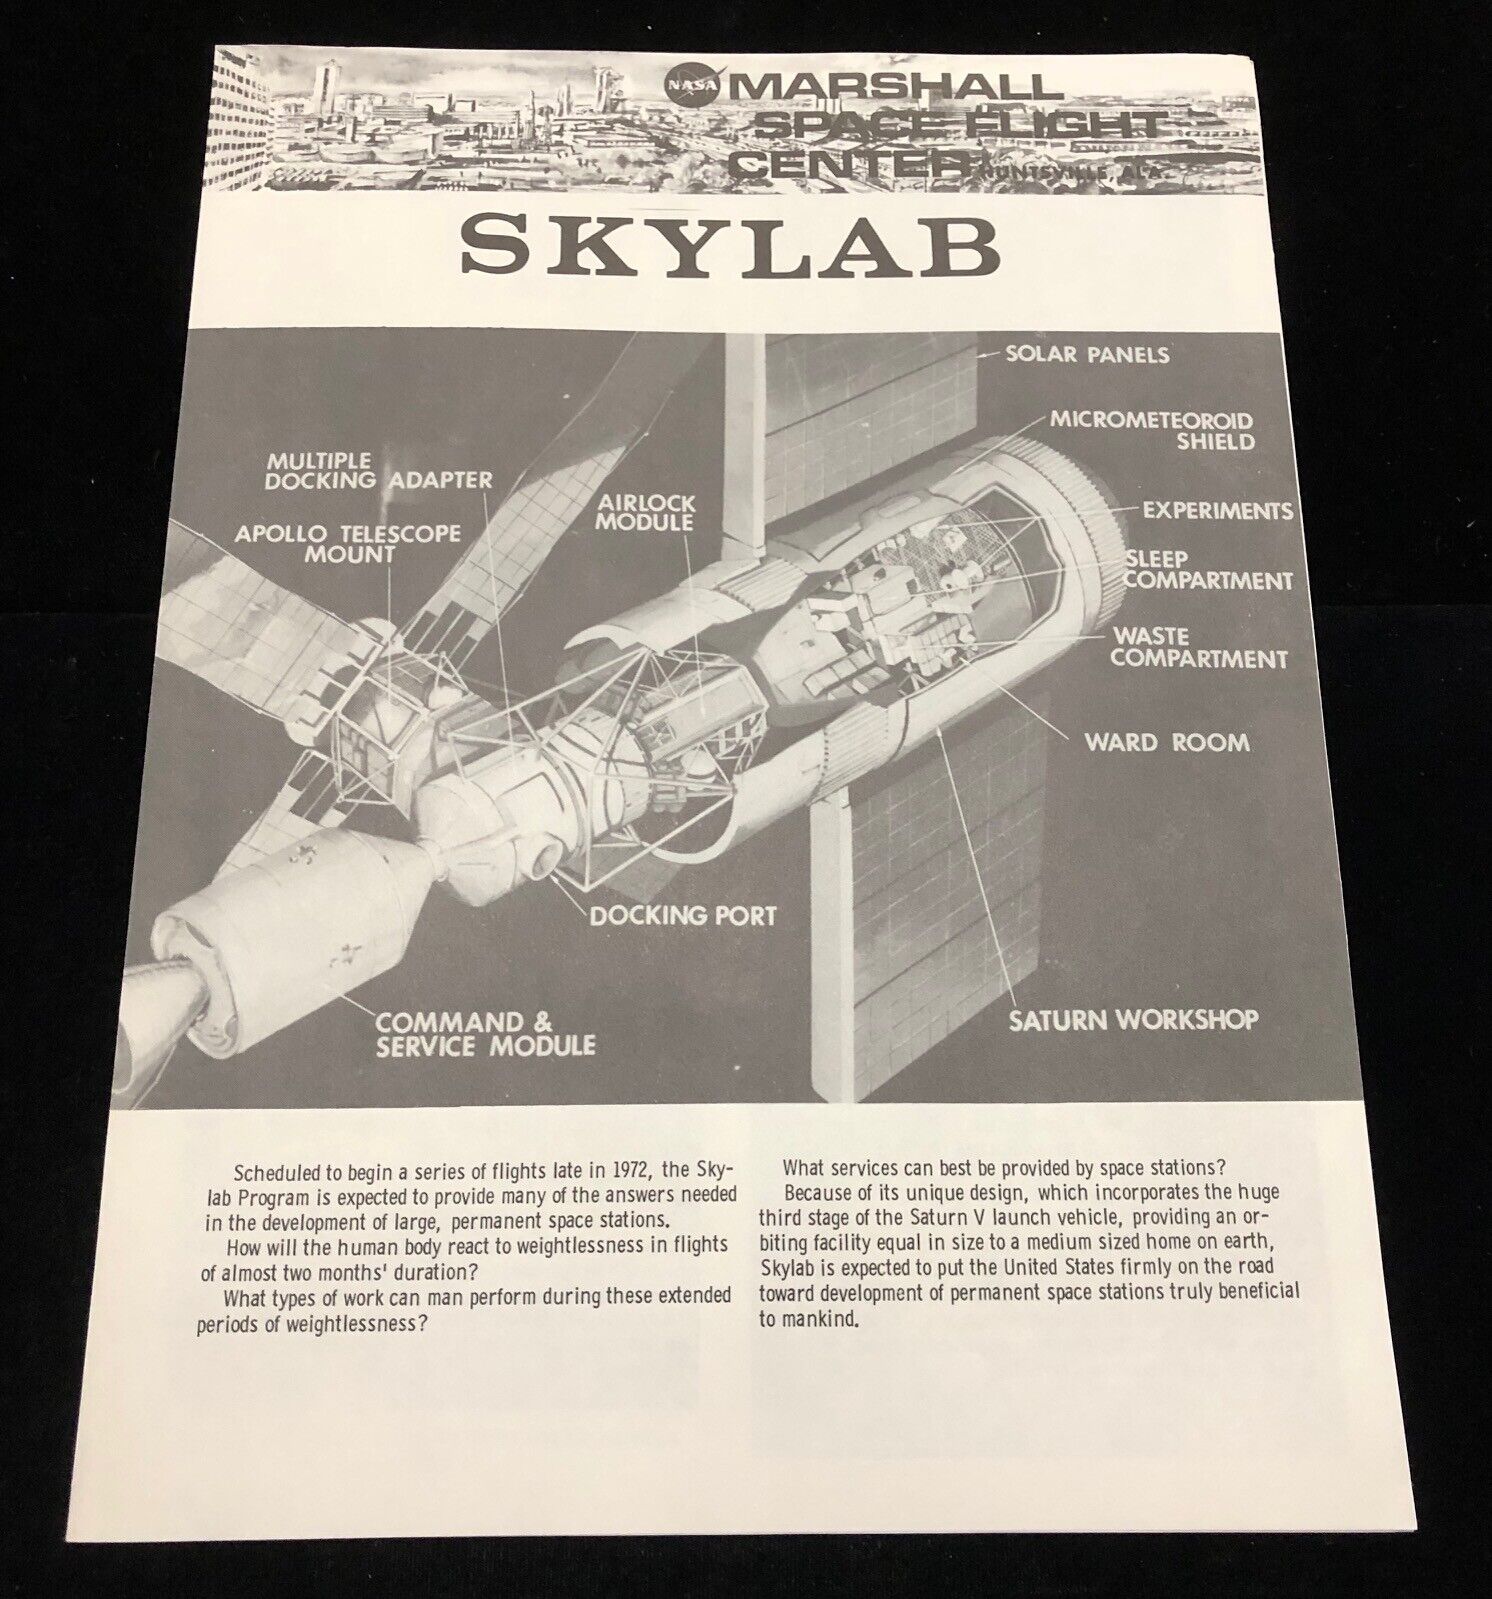 PROJECT SKYLAB MARSHALL SPACE FLIGHT CENTER FACT SHEET